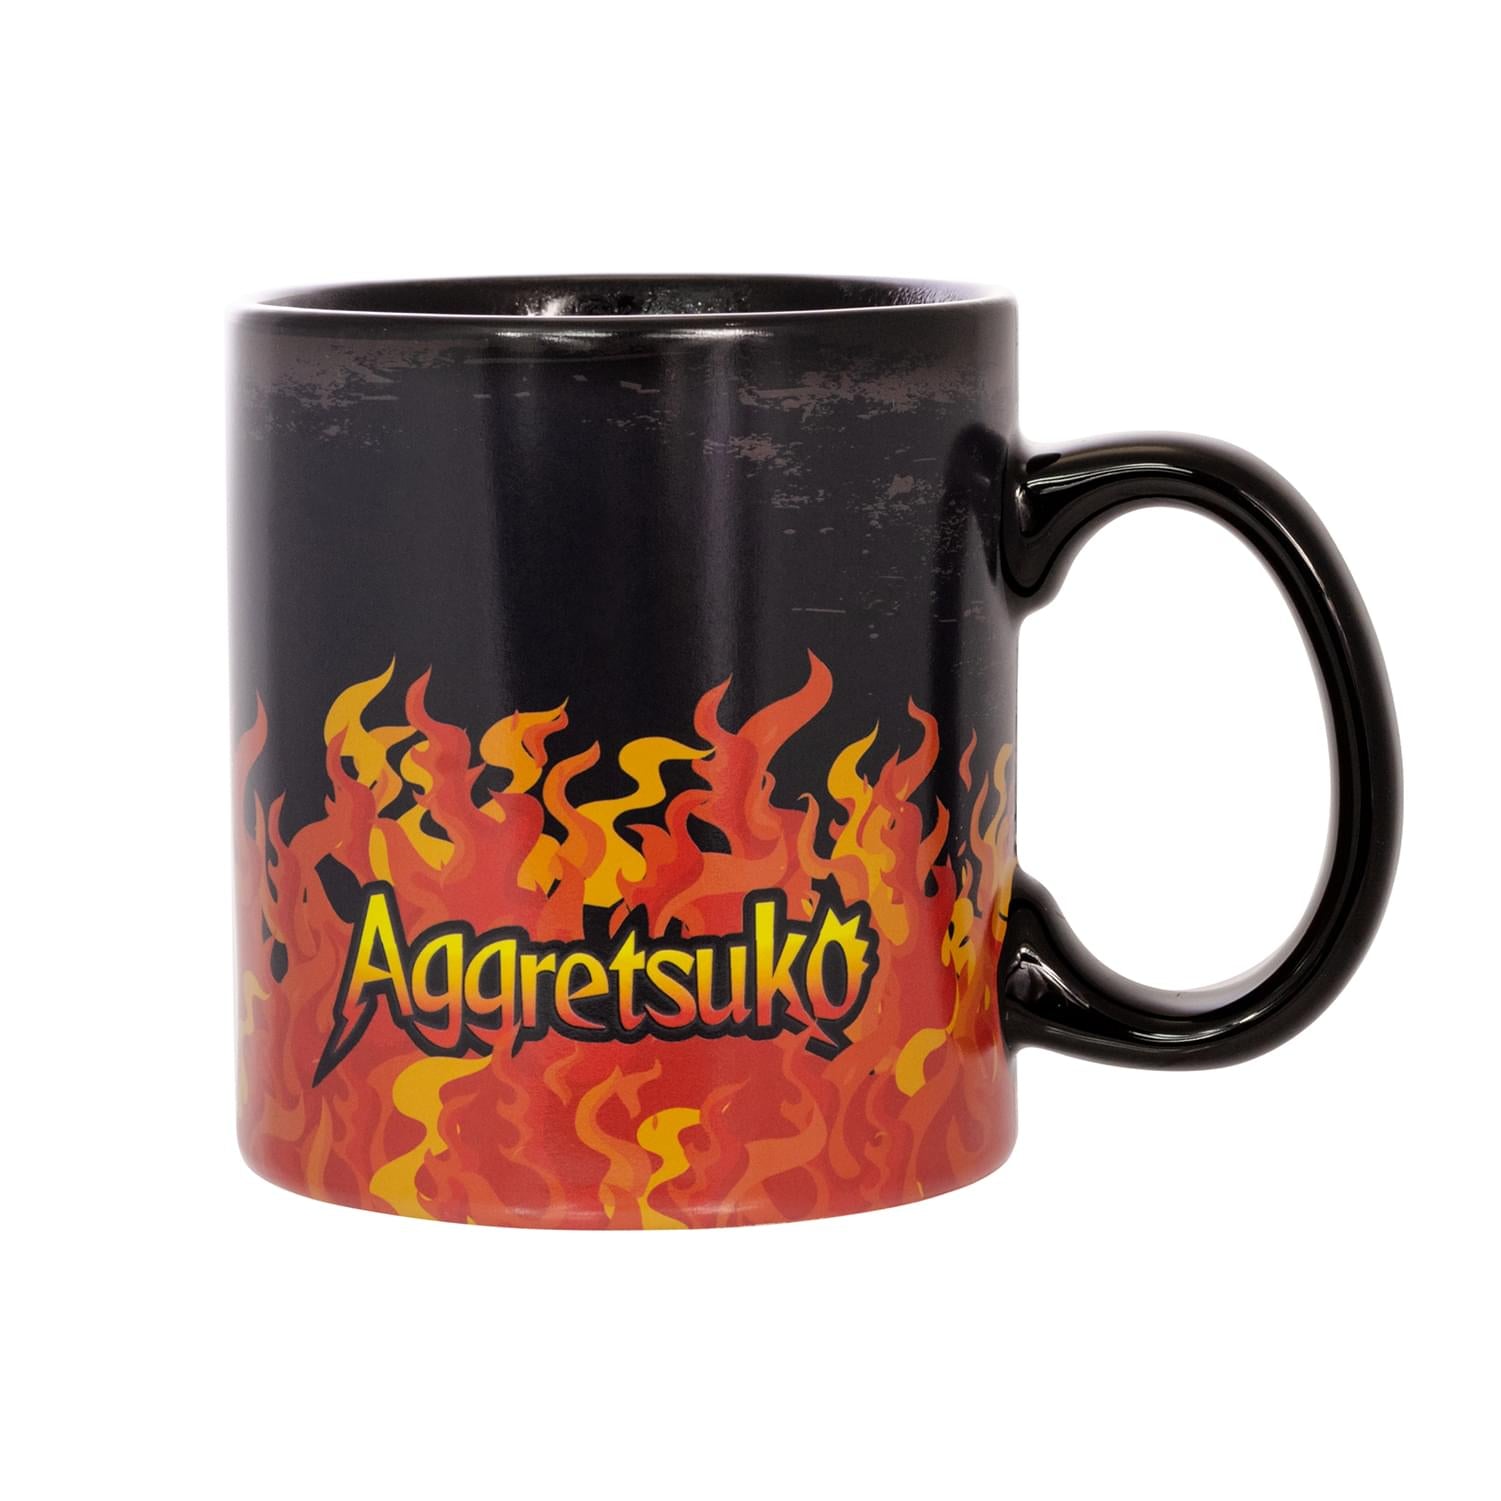 Aggretsuko Heat Reveal Fire & Skulls 20oz Ceramic Coffee Mug